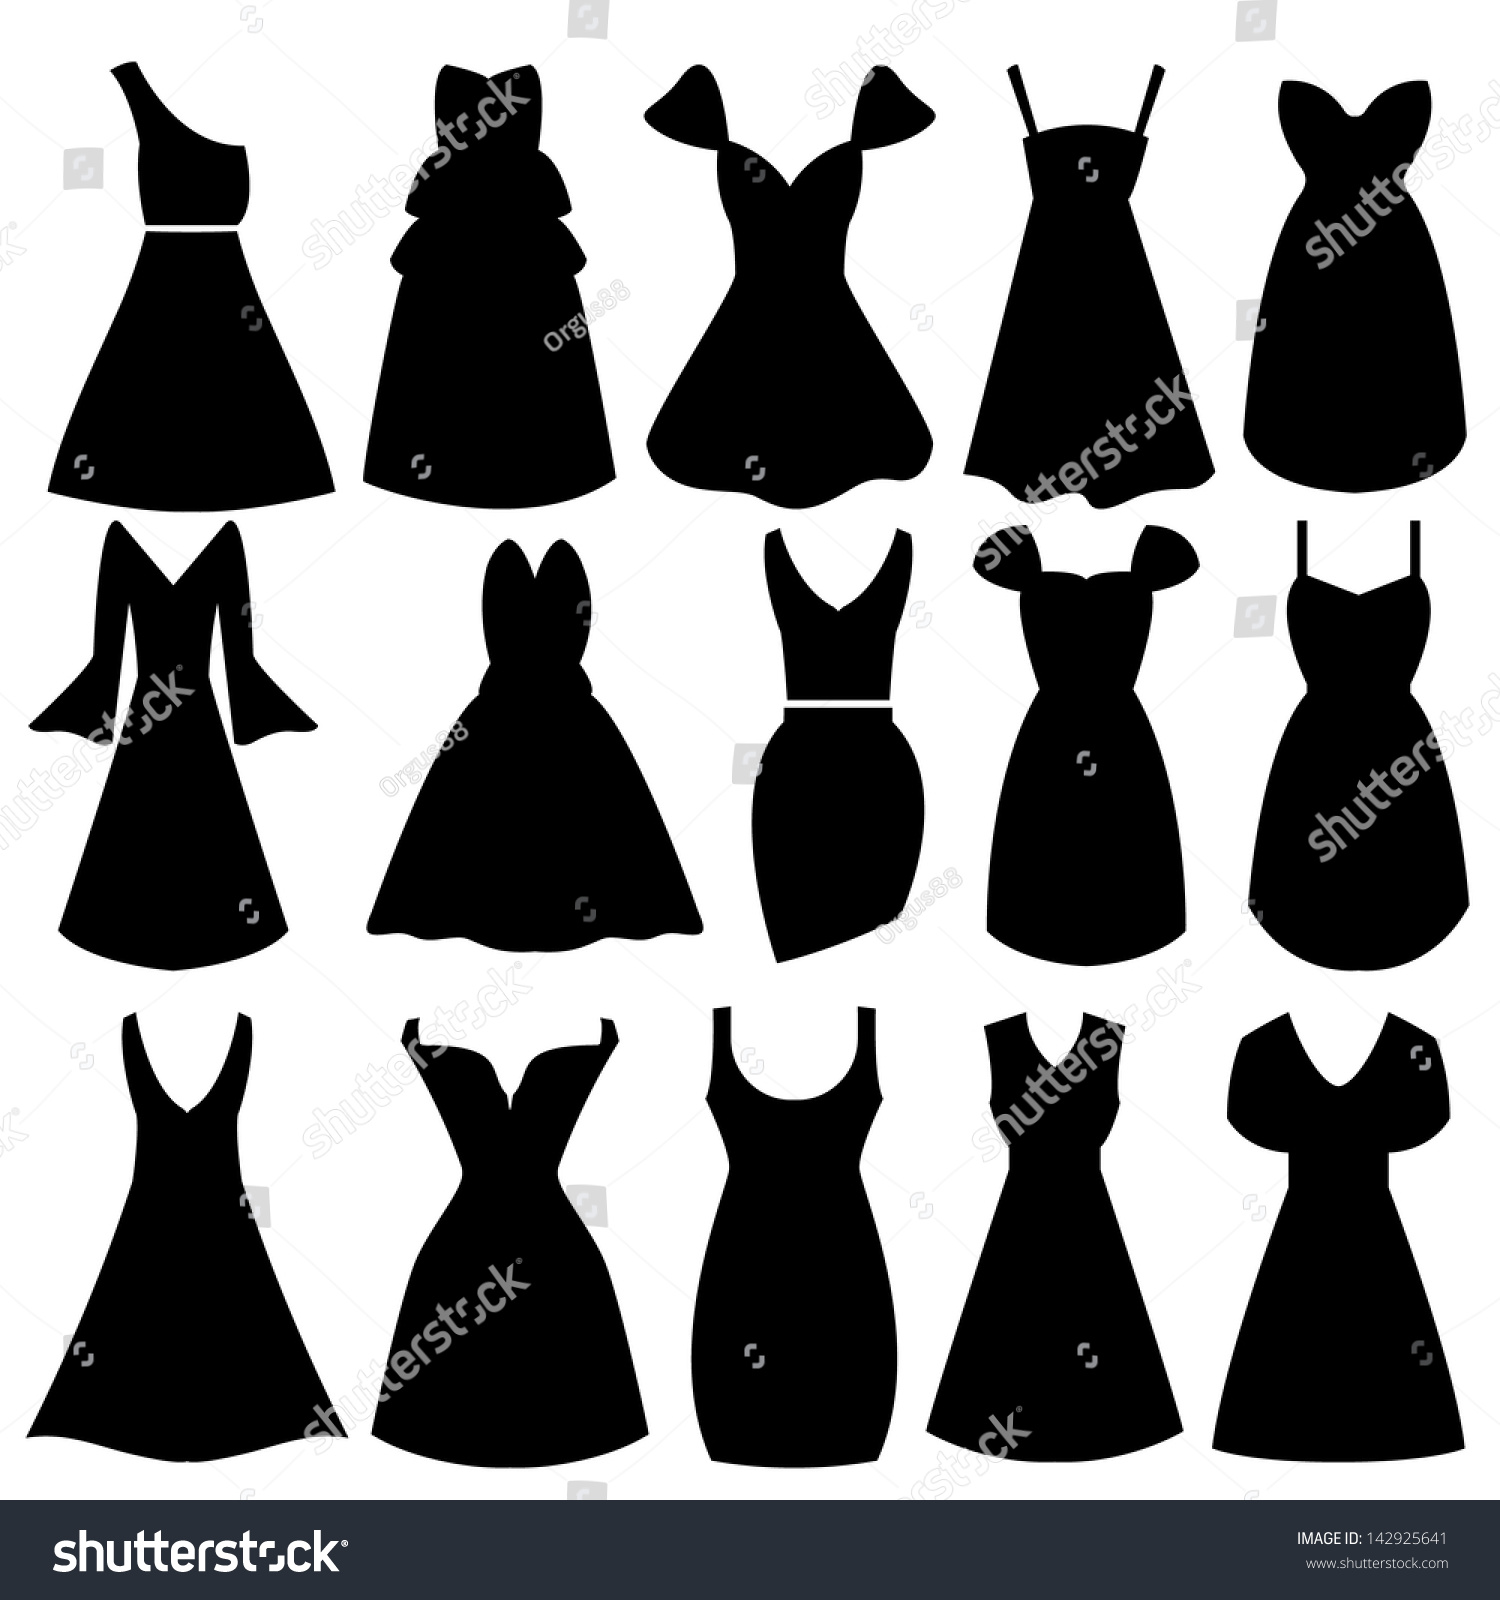 Vector Women Dress Silhouettes Stock Vector 142925641 - Shutterstock